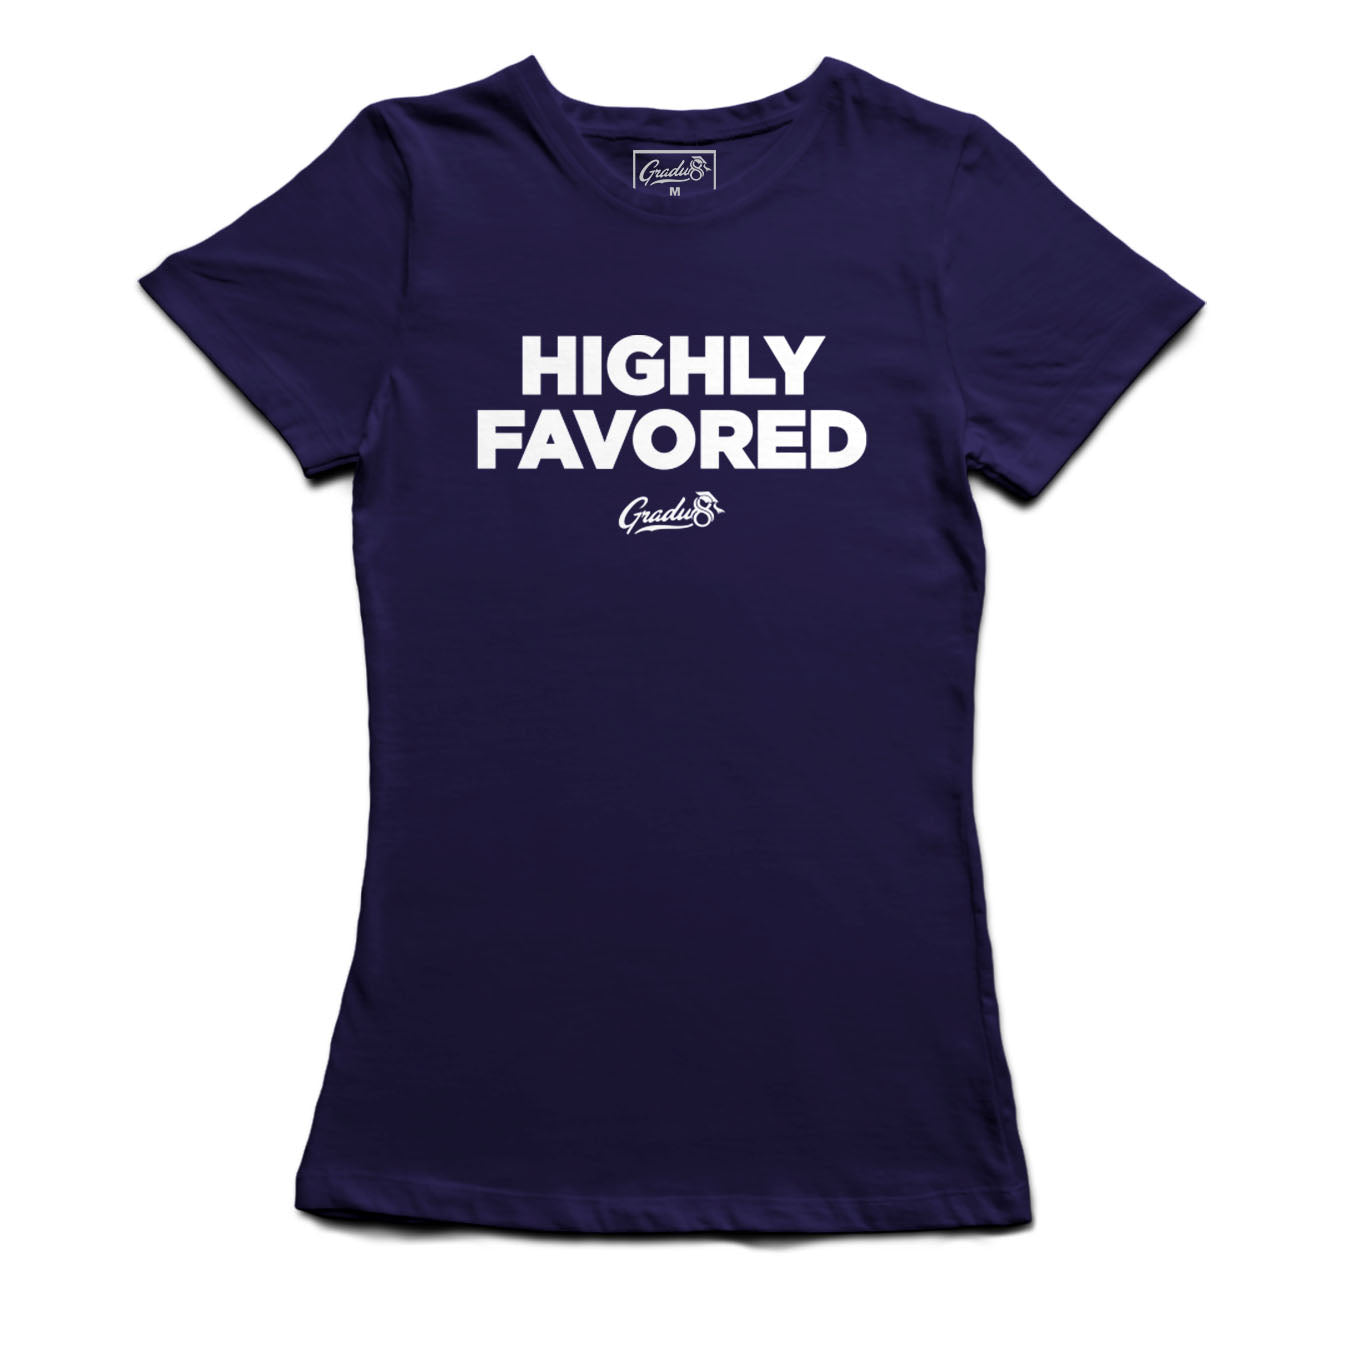 Women's Highly Favored Premium T-shirt - Navy Blue